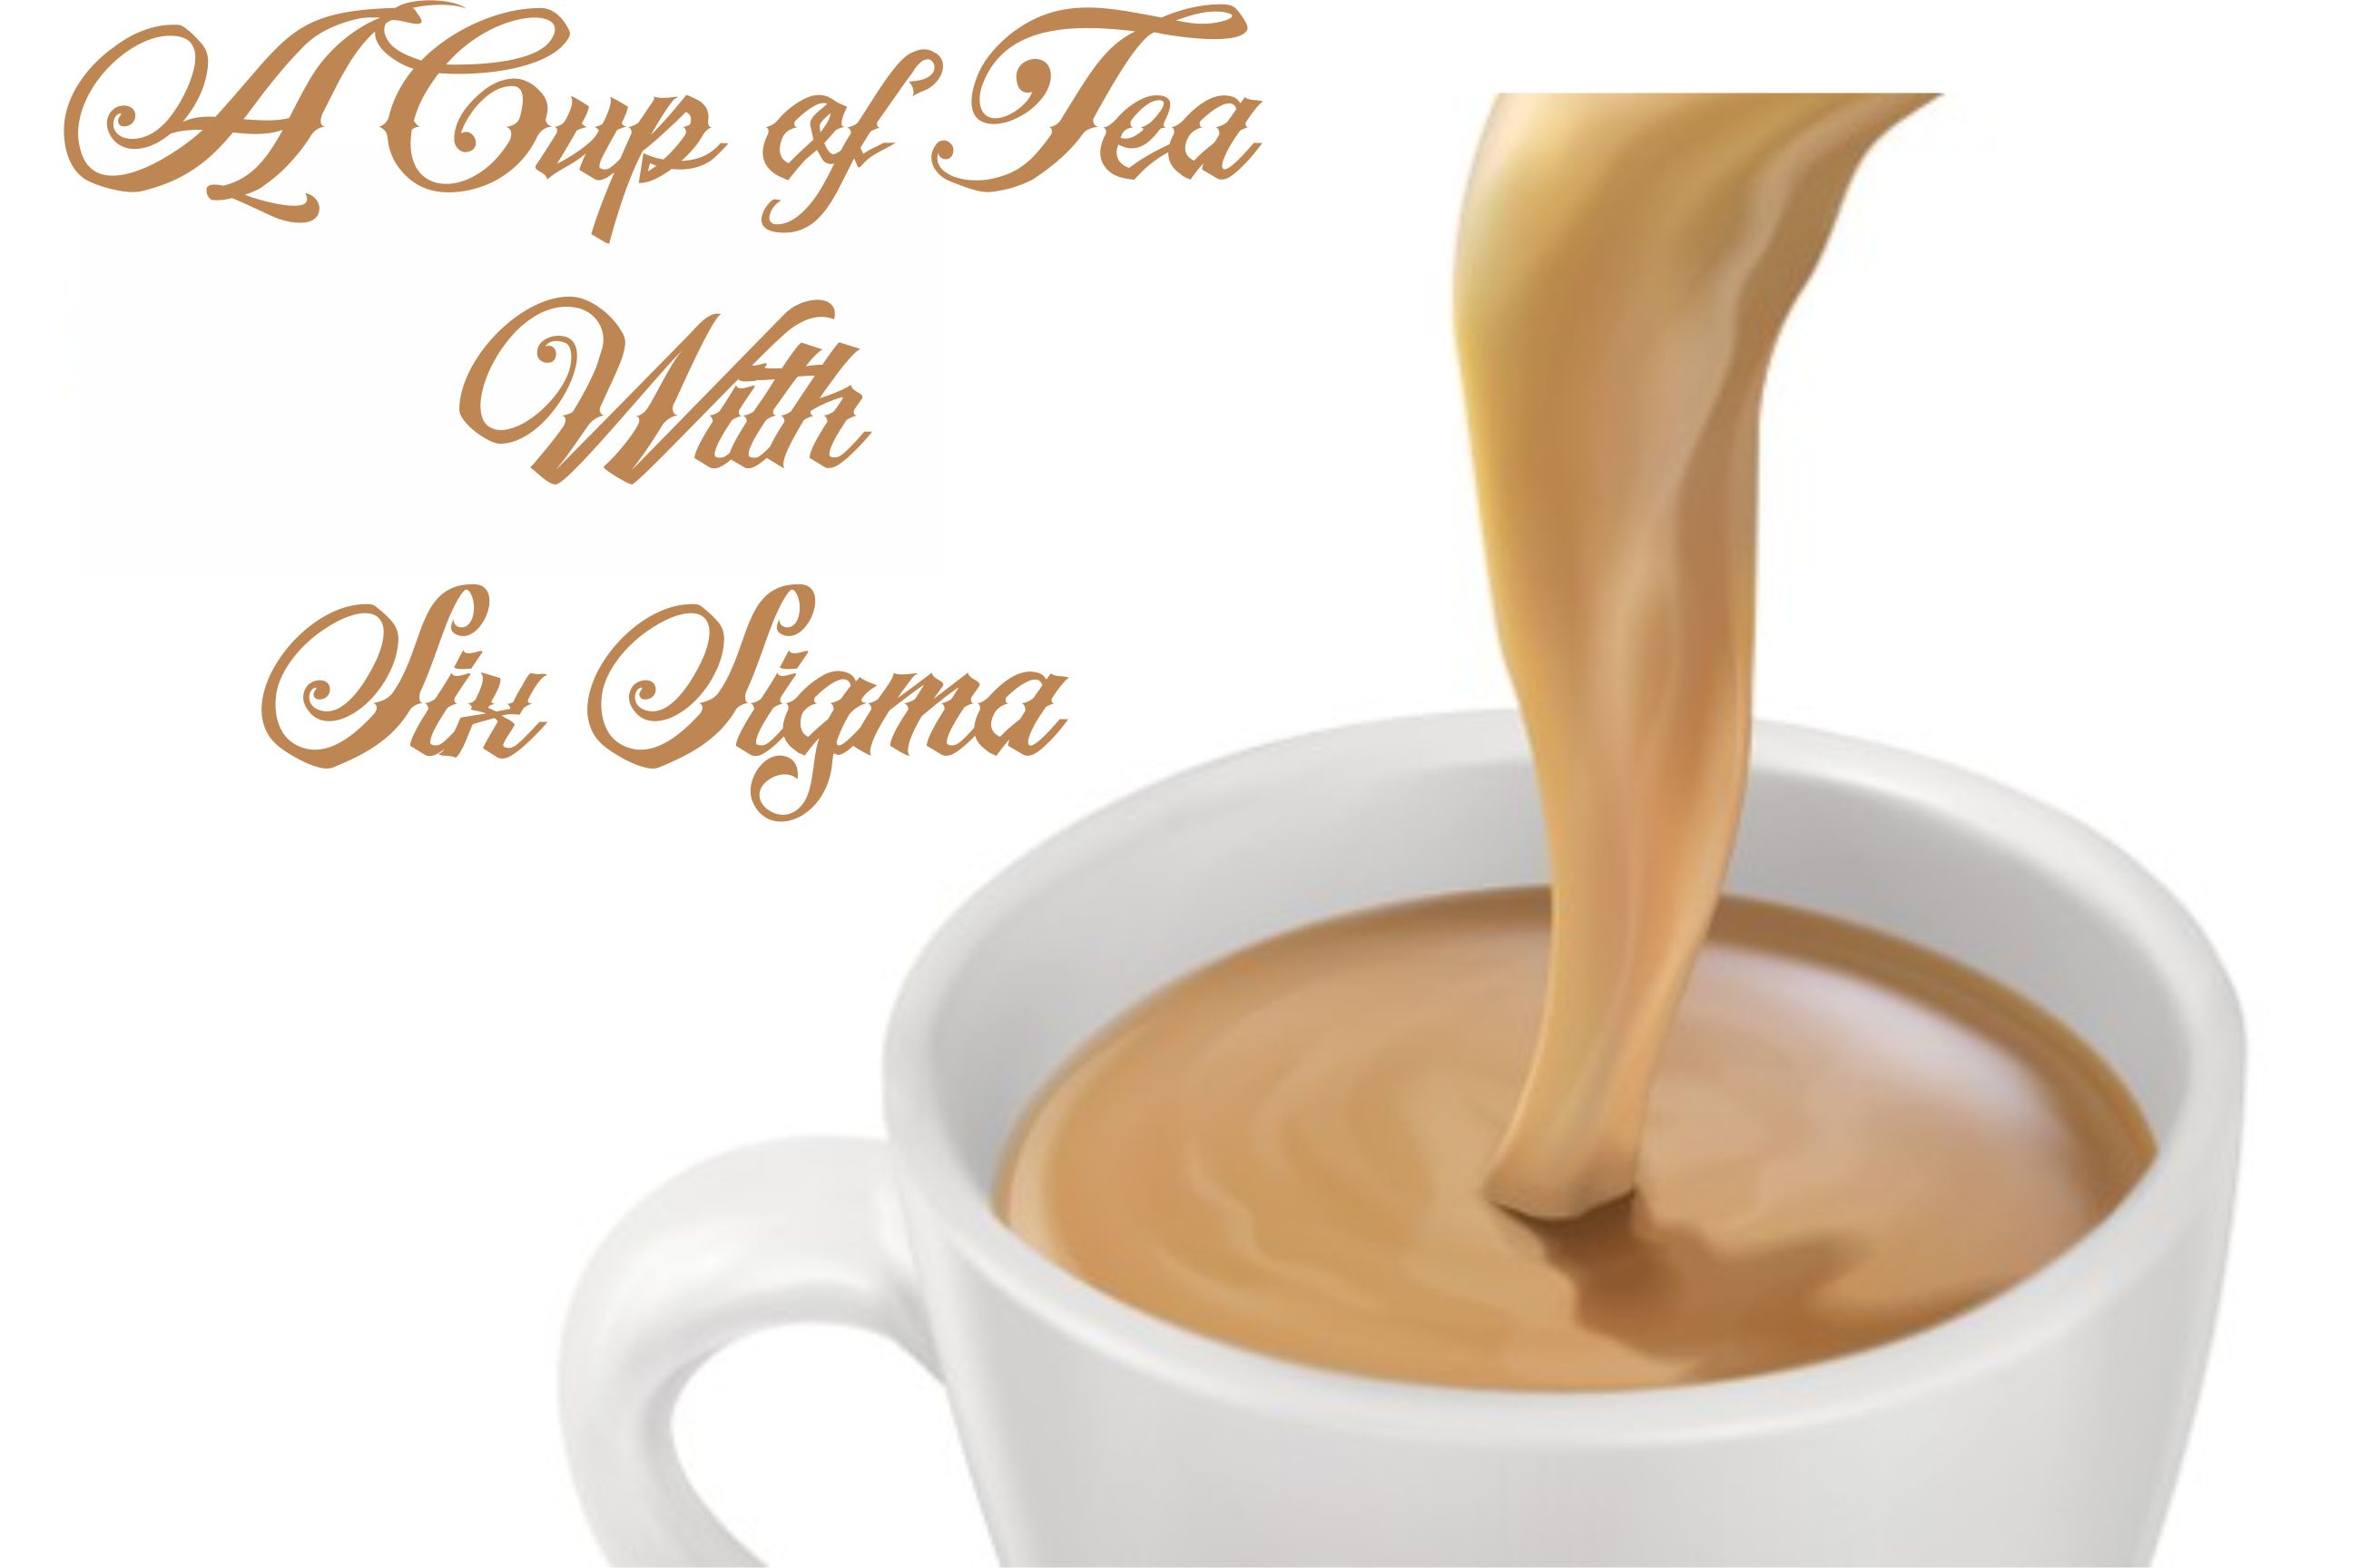 A Cup of Tea With Six Sigma - NIQC International